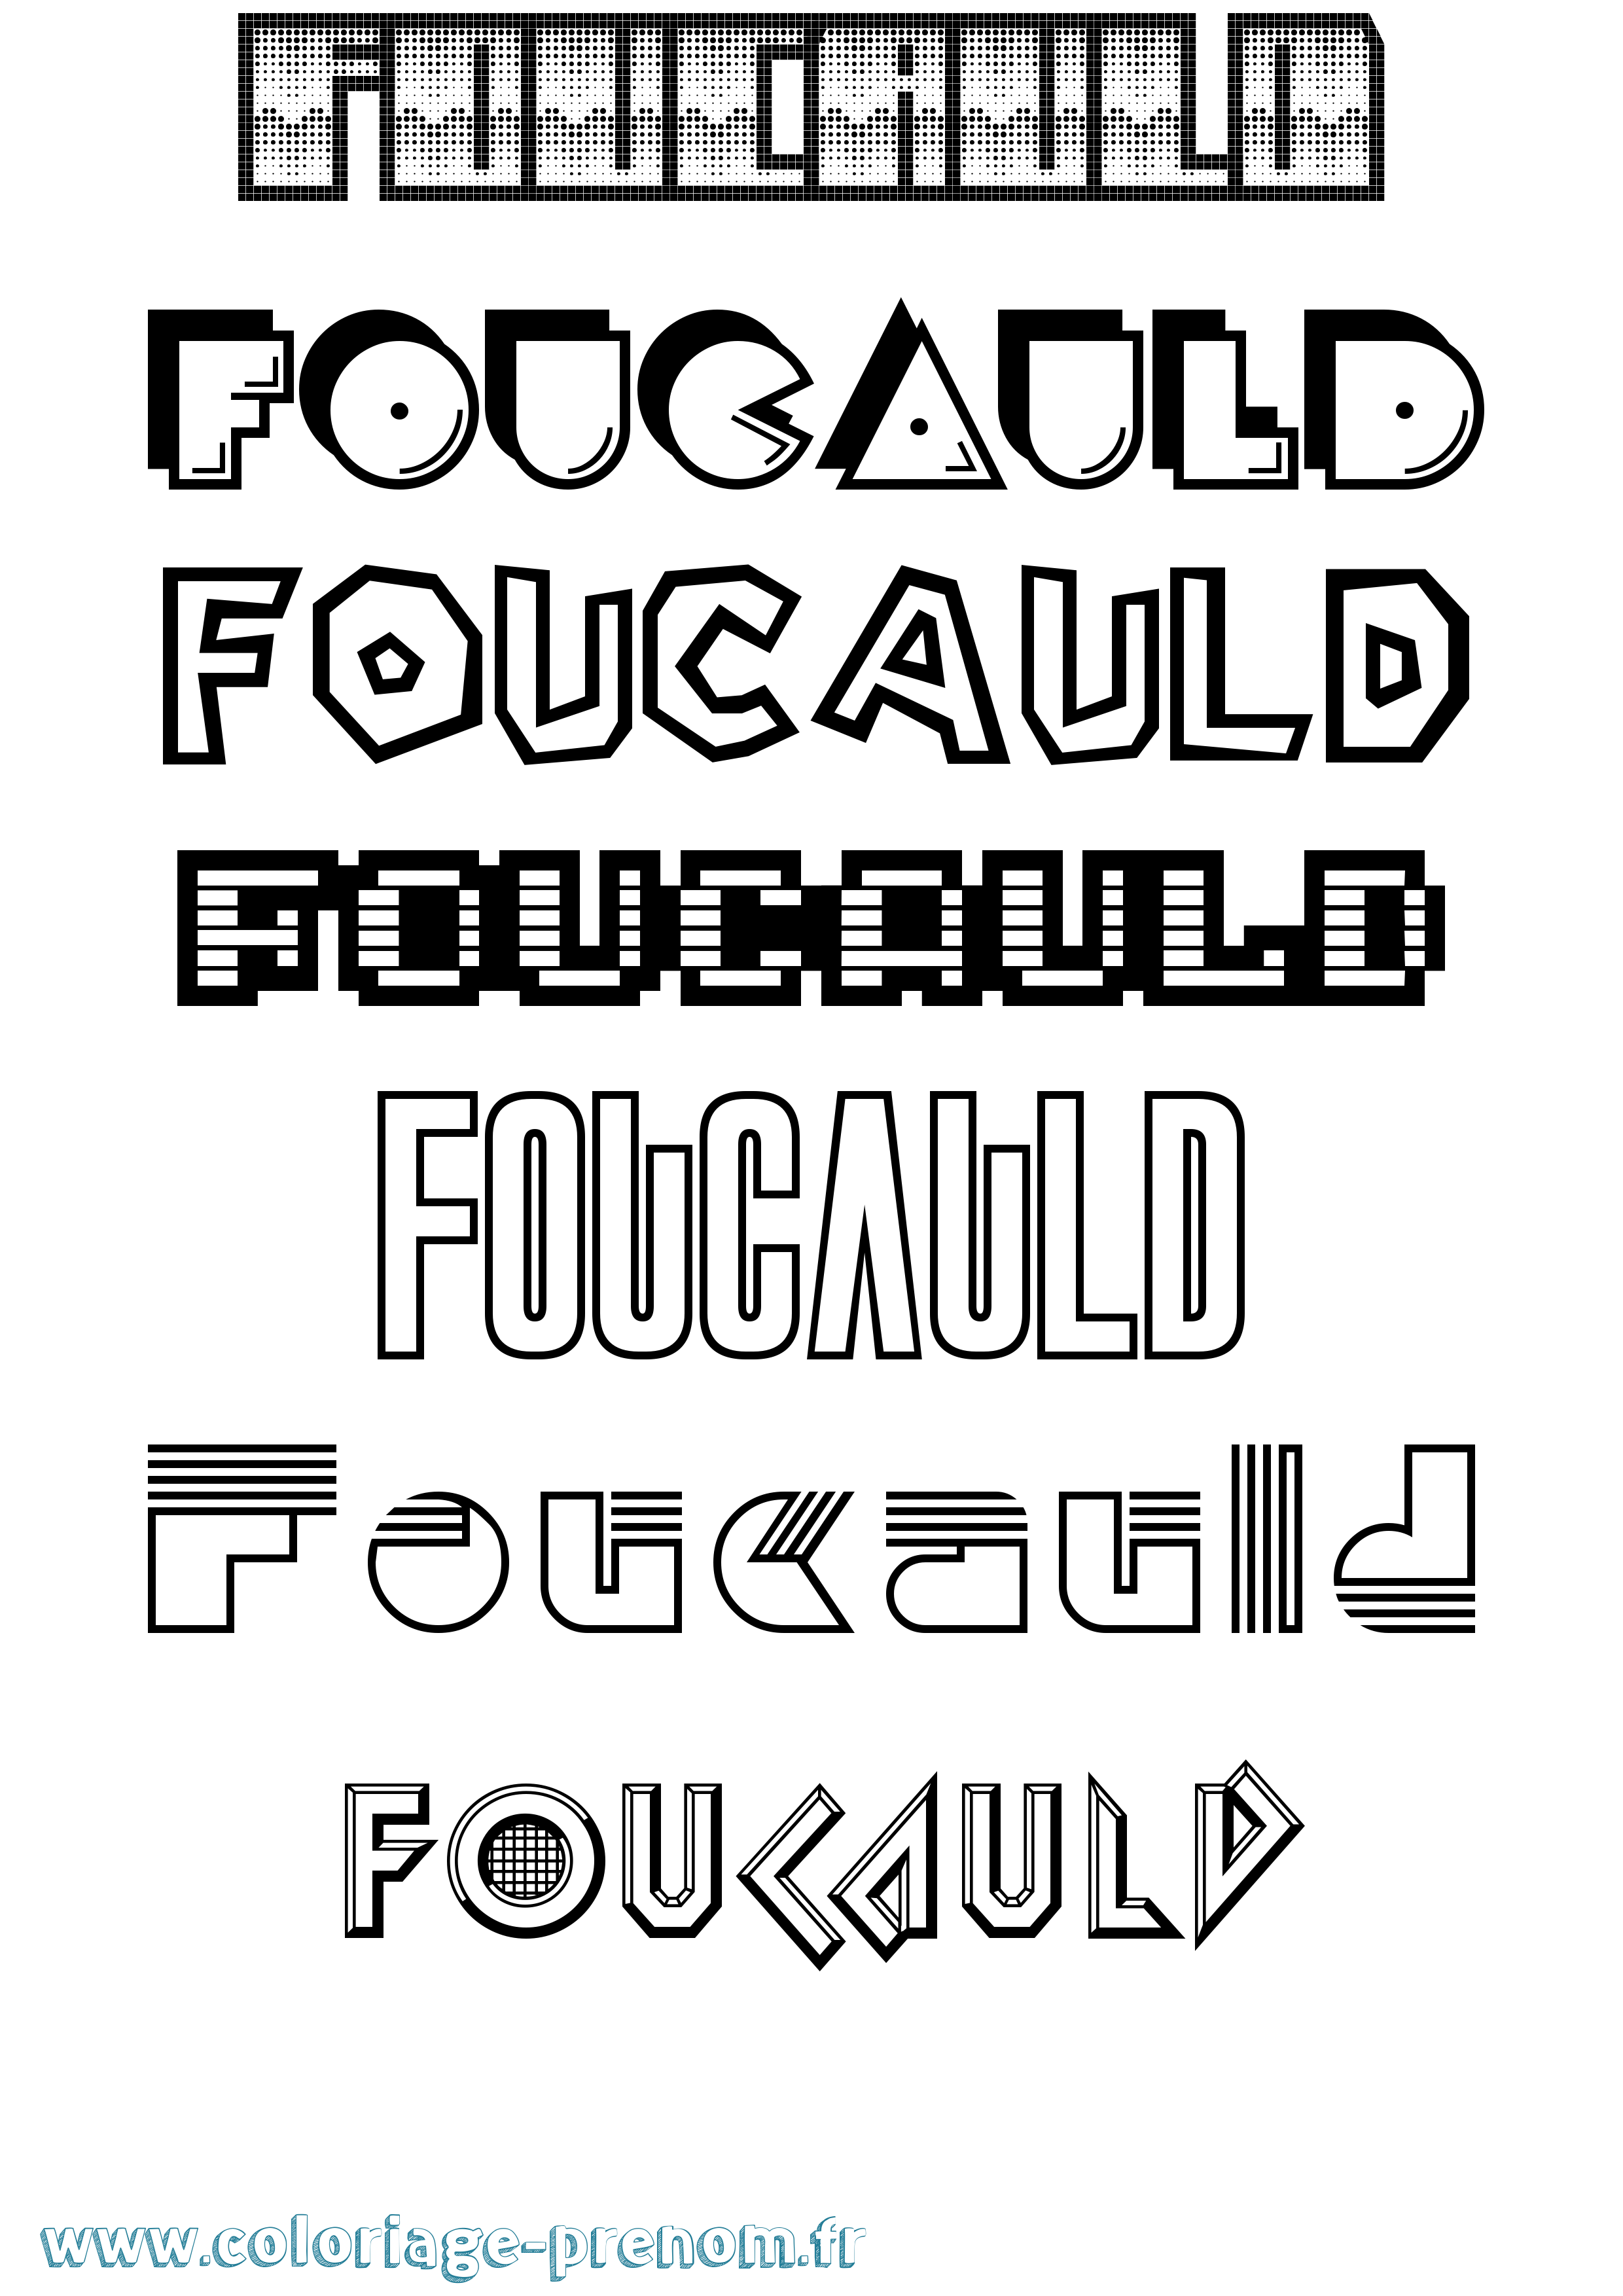 Coloriage prénom Foucauld